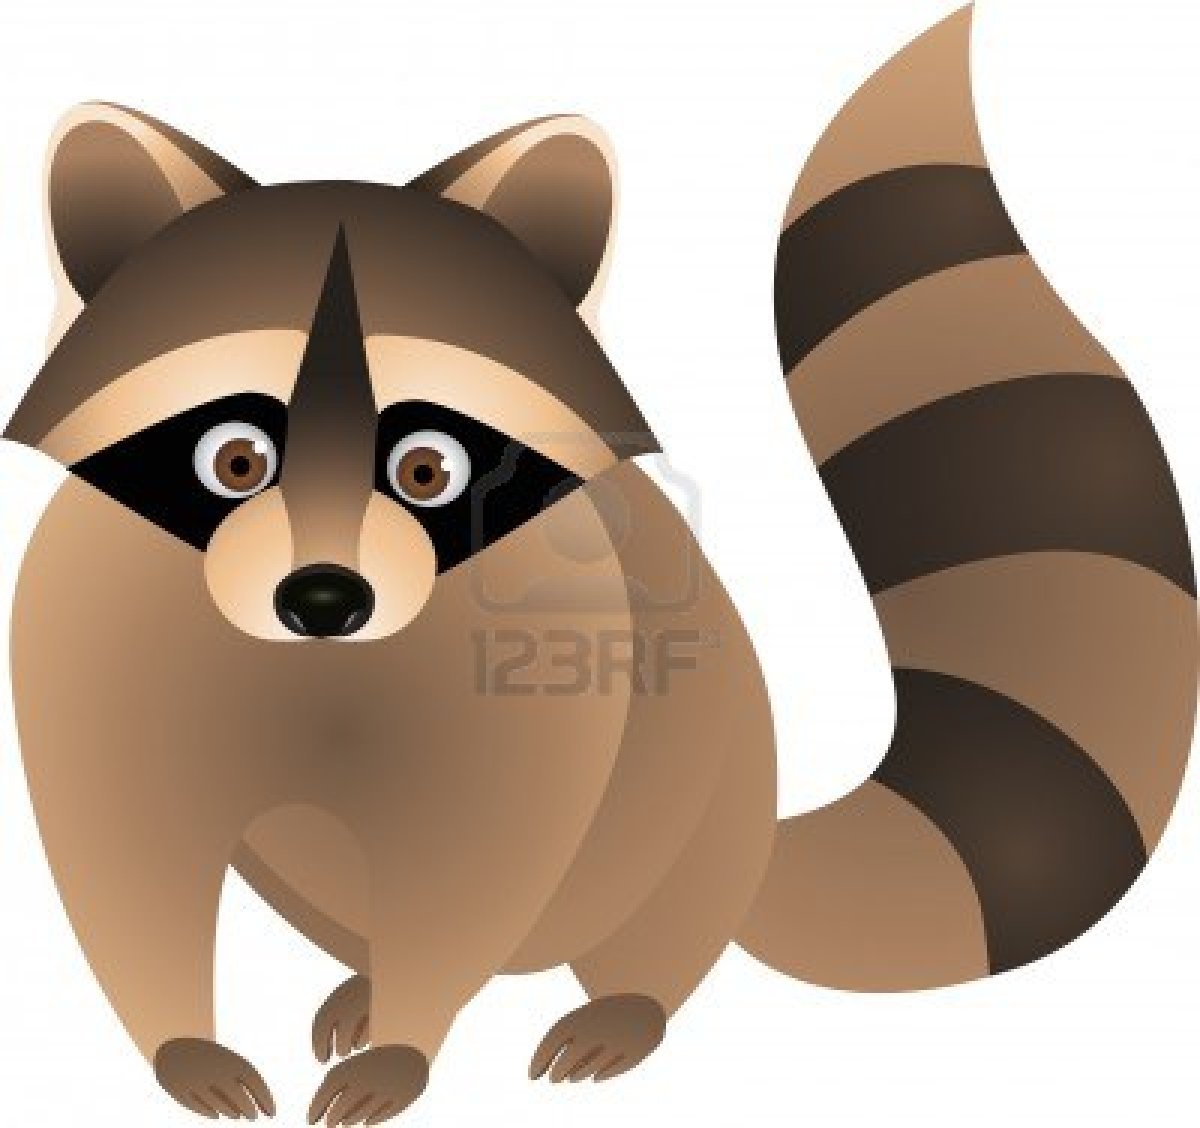 Raccoon Cartoon Stock Photo.